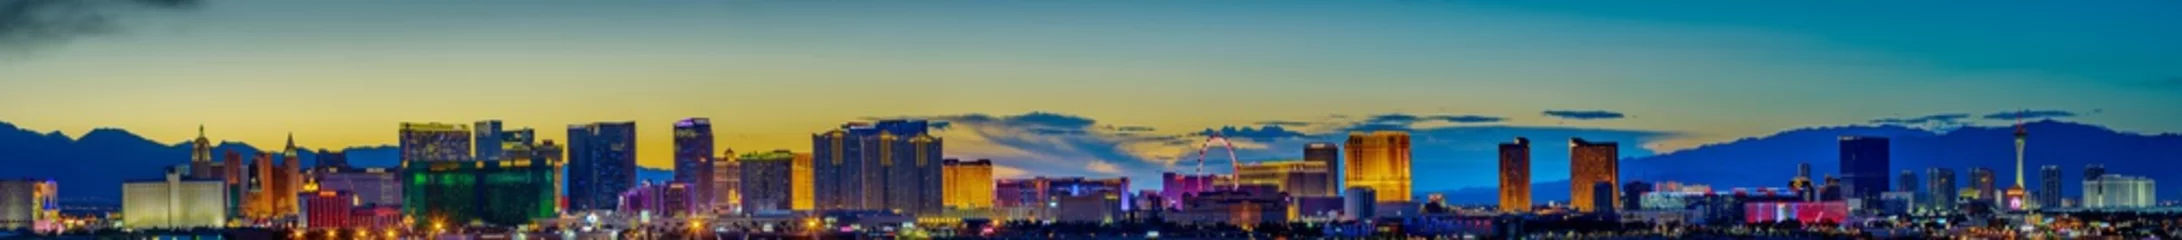 Poster Skyline-Blick bei Sonnenuntergang des berühmten Las Vegas Strip in Weltklasse-Hotels und Casinos, NV © yooranpark